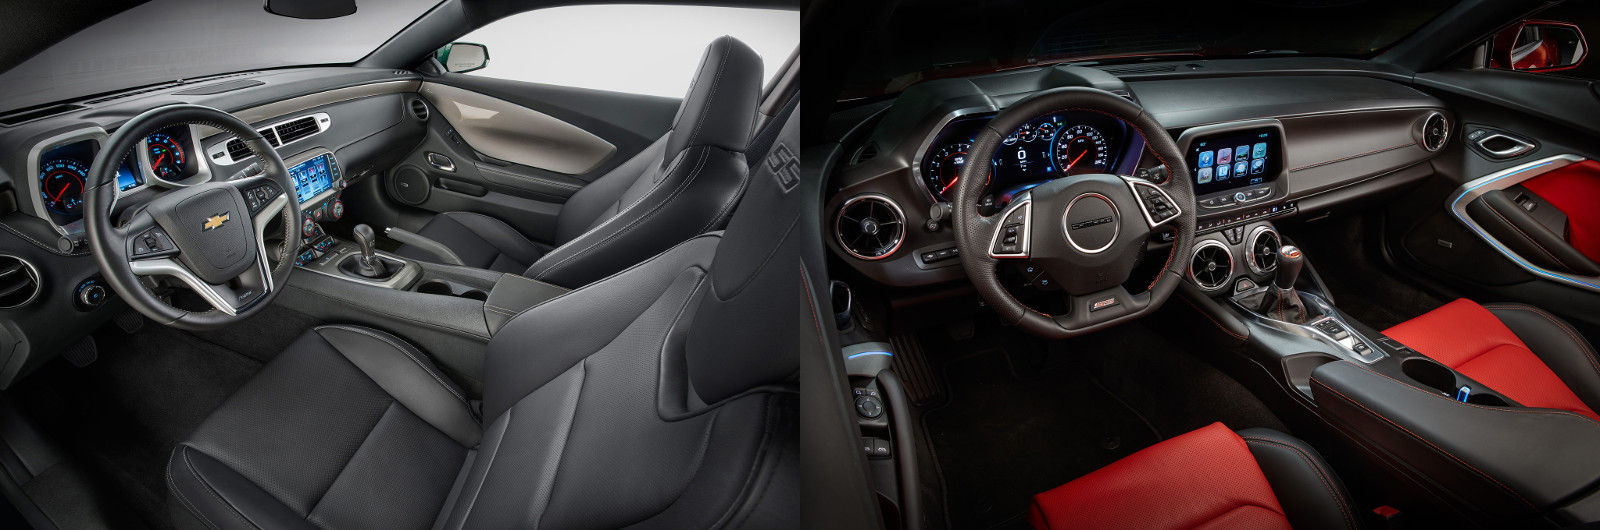 2015 Camaro Dome Light - 2010 2015 Chevy Camaro W5w Led Interior Dome Light...